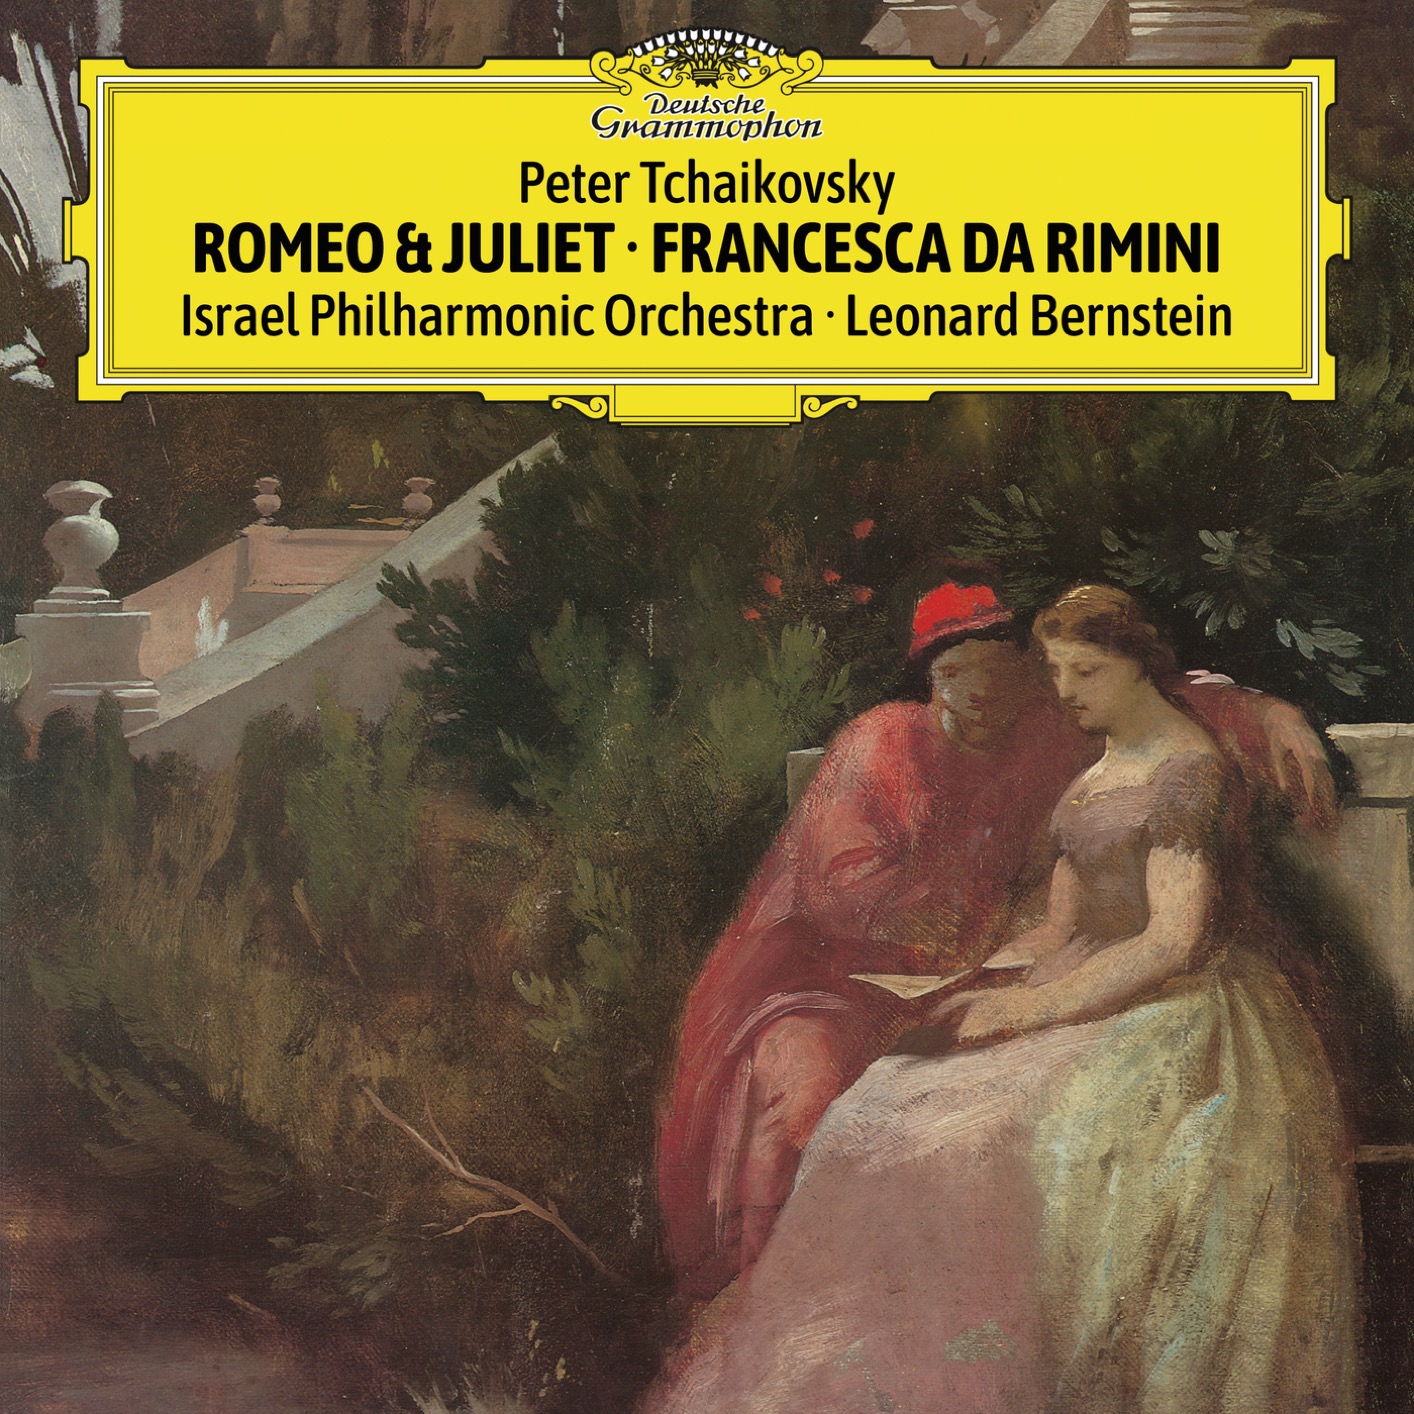 Israel Philharmonic Orchestra & Leonard Bernstein - Tchaikovsky: Romeo & Juliet, Francesca da Rimini (Live) (1979/2017) [FLAC 24bit/96kHz]